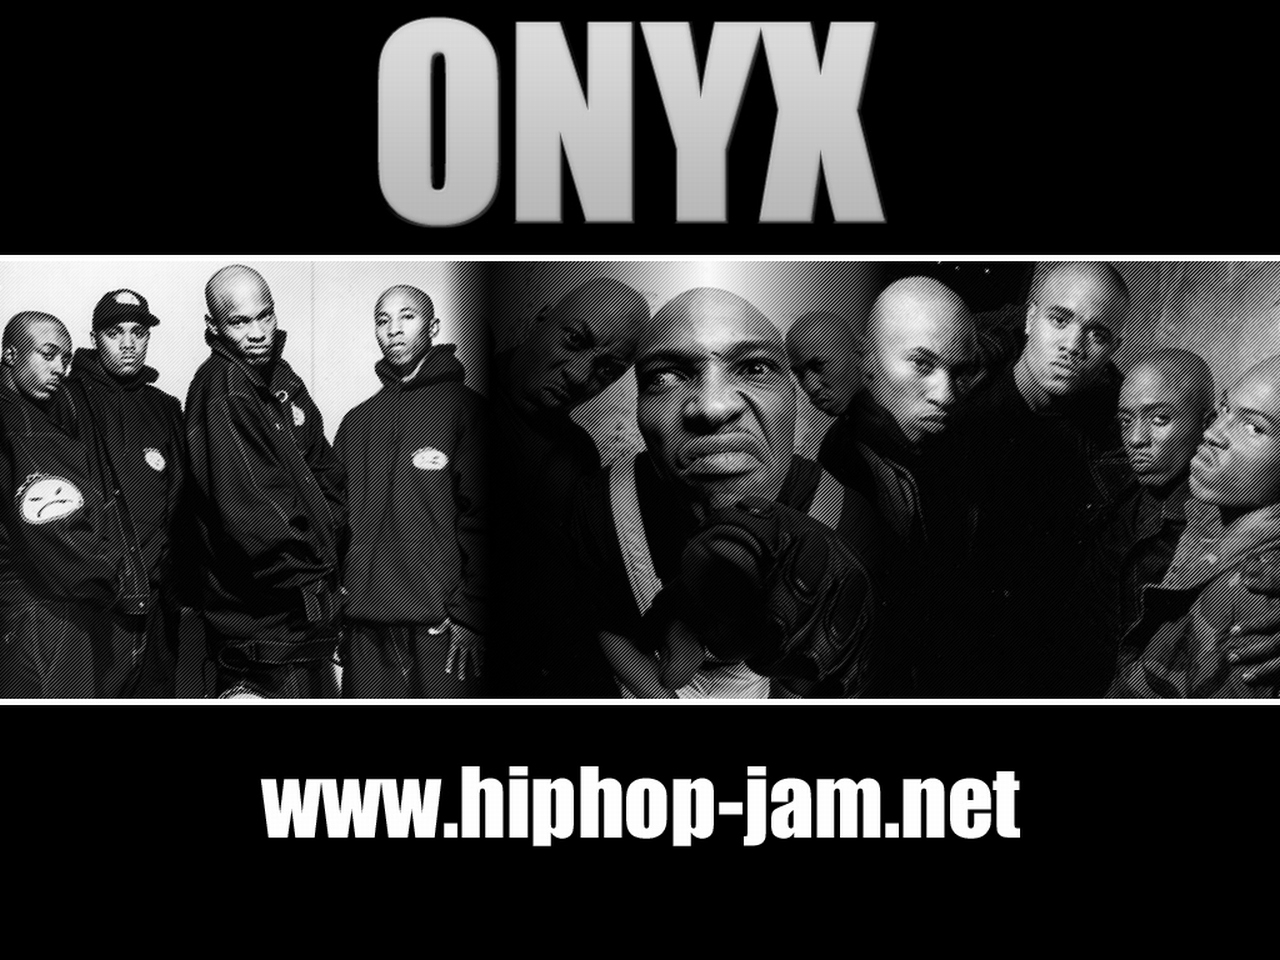 Onyx page. Onyx Rapper. Onyx рэп. Onyx группа фото. Onyx логотип группы.